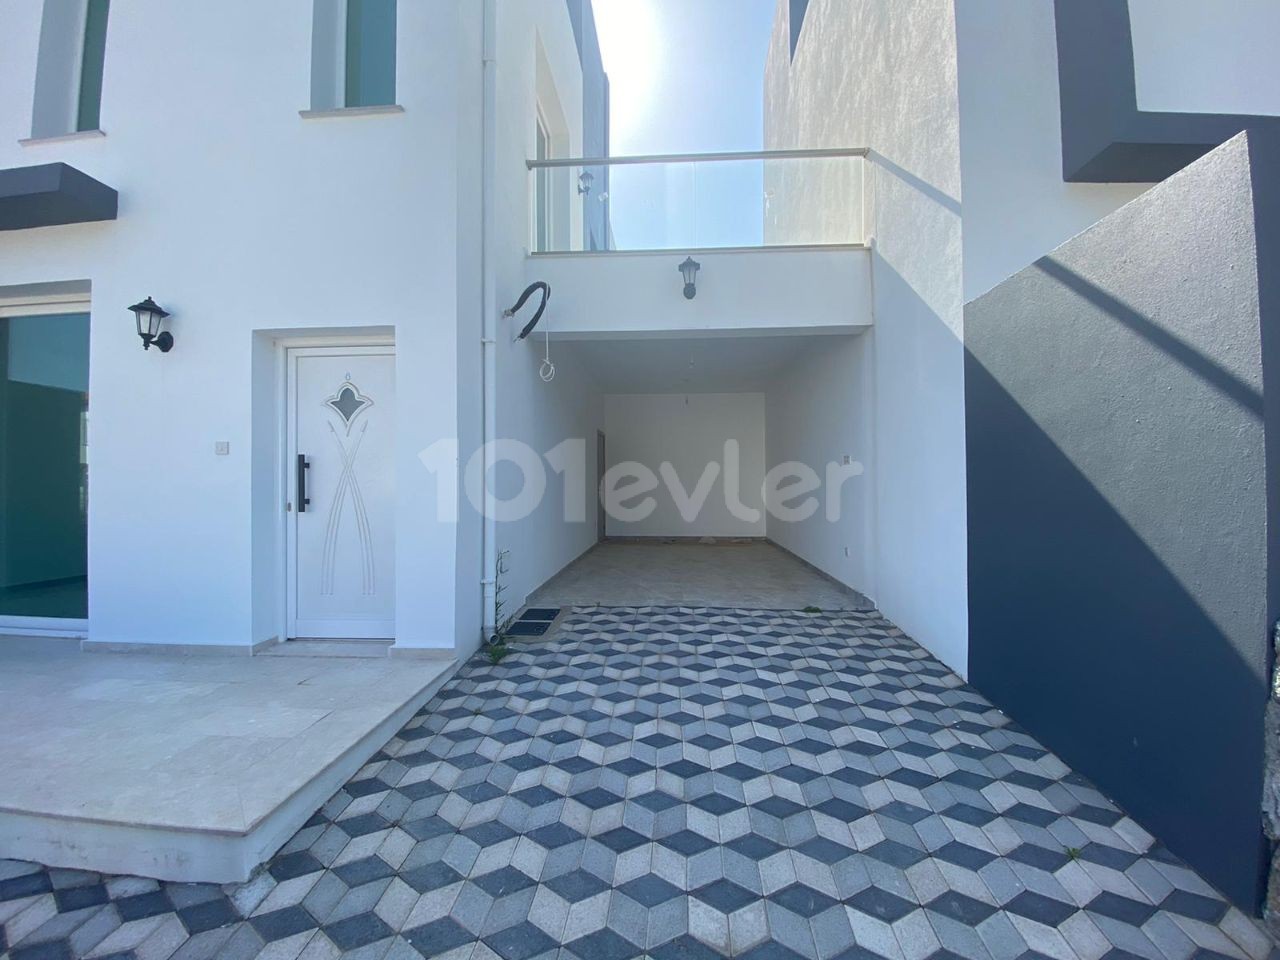 2 + 1, 140 m2 Villas for Sale in Kyrenia Karsiyaka at Prices Starting from STG 110,000 !!! ** 